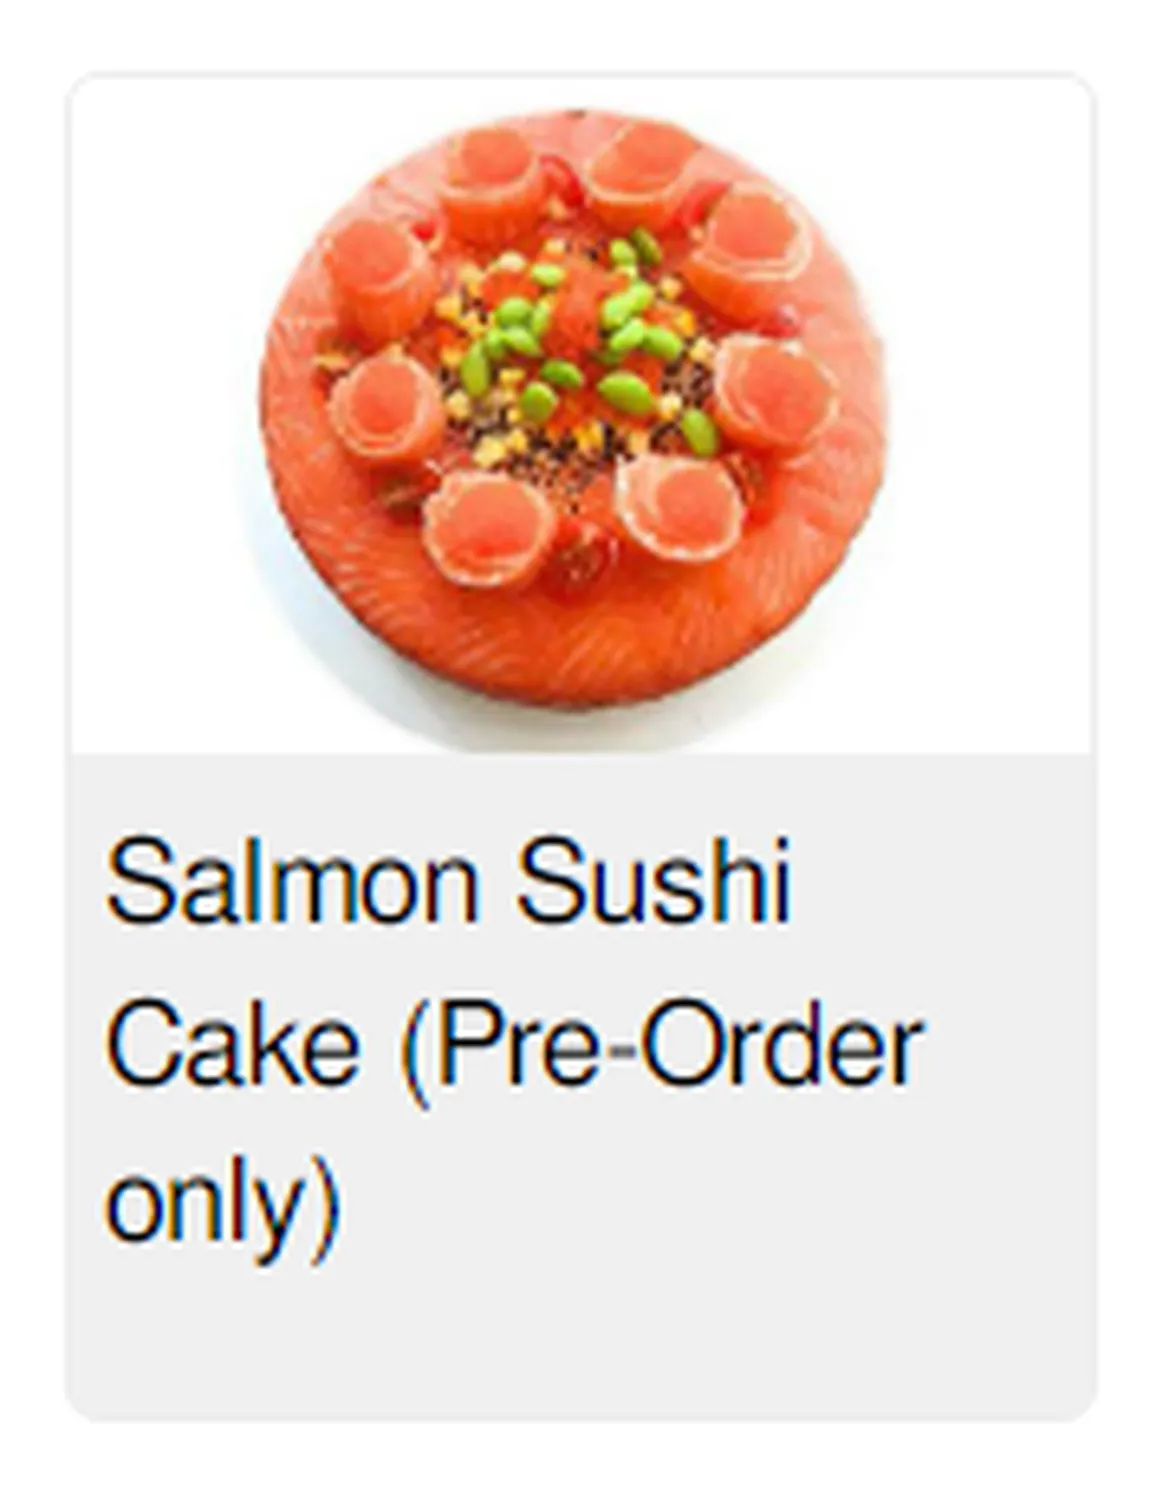 hei sushi menu singapore salmon sushi cake